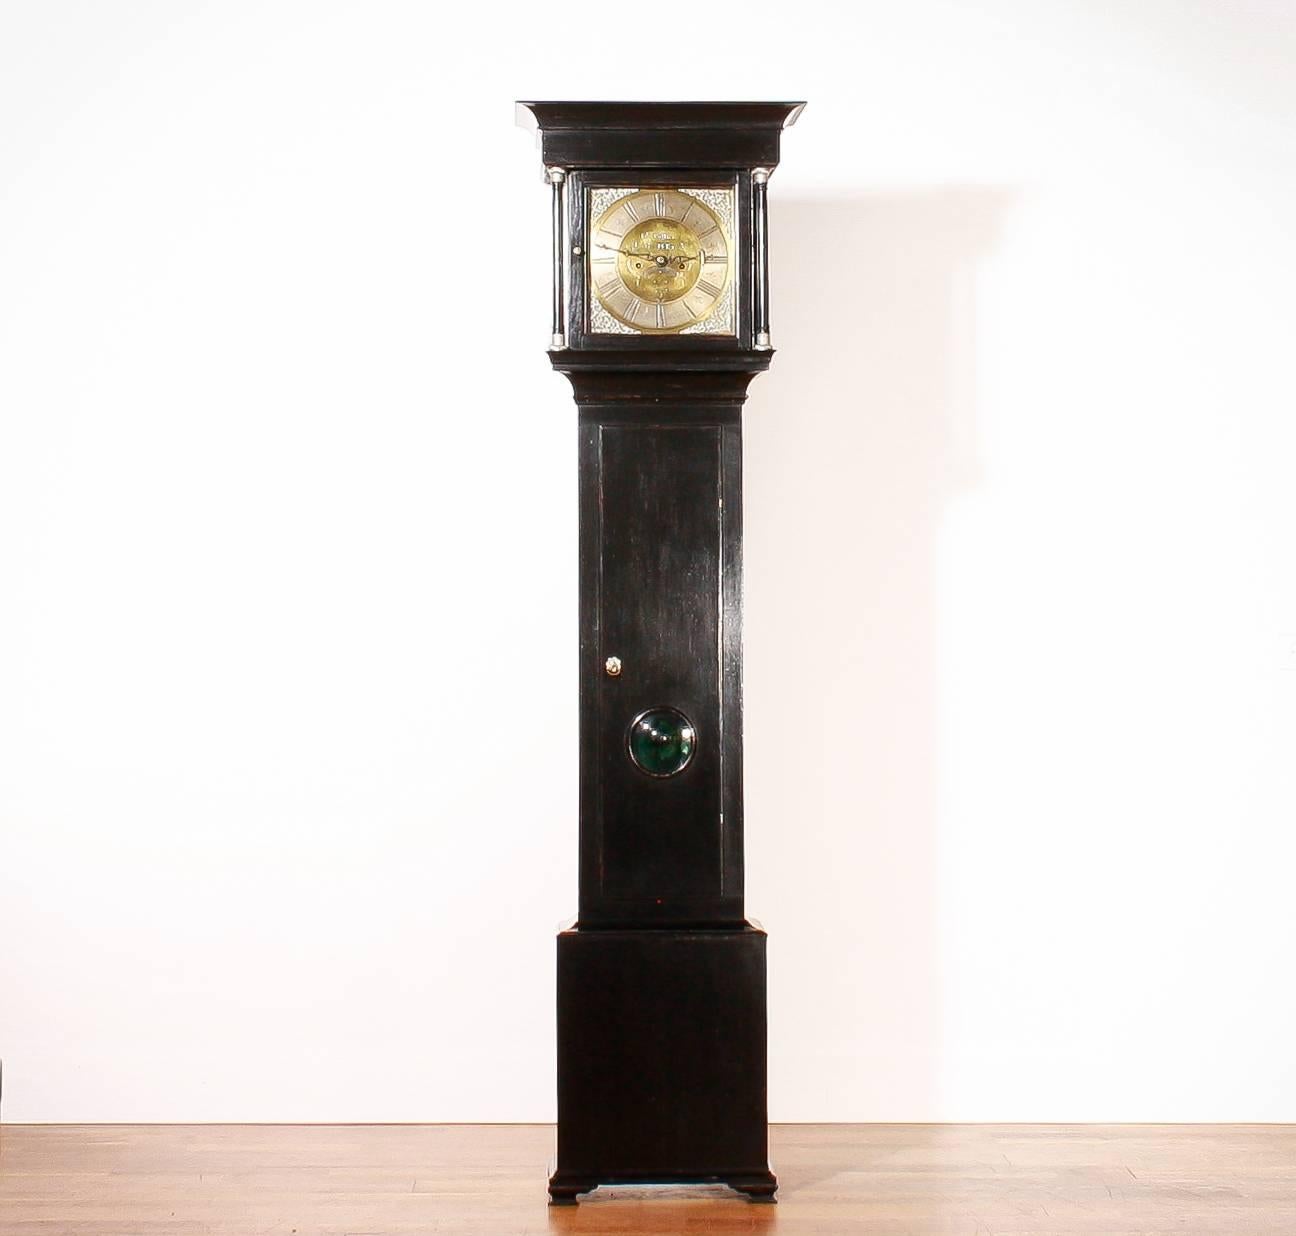 British Early 18th Century, I.W.M., London Longcase Clock in Black Polish